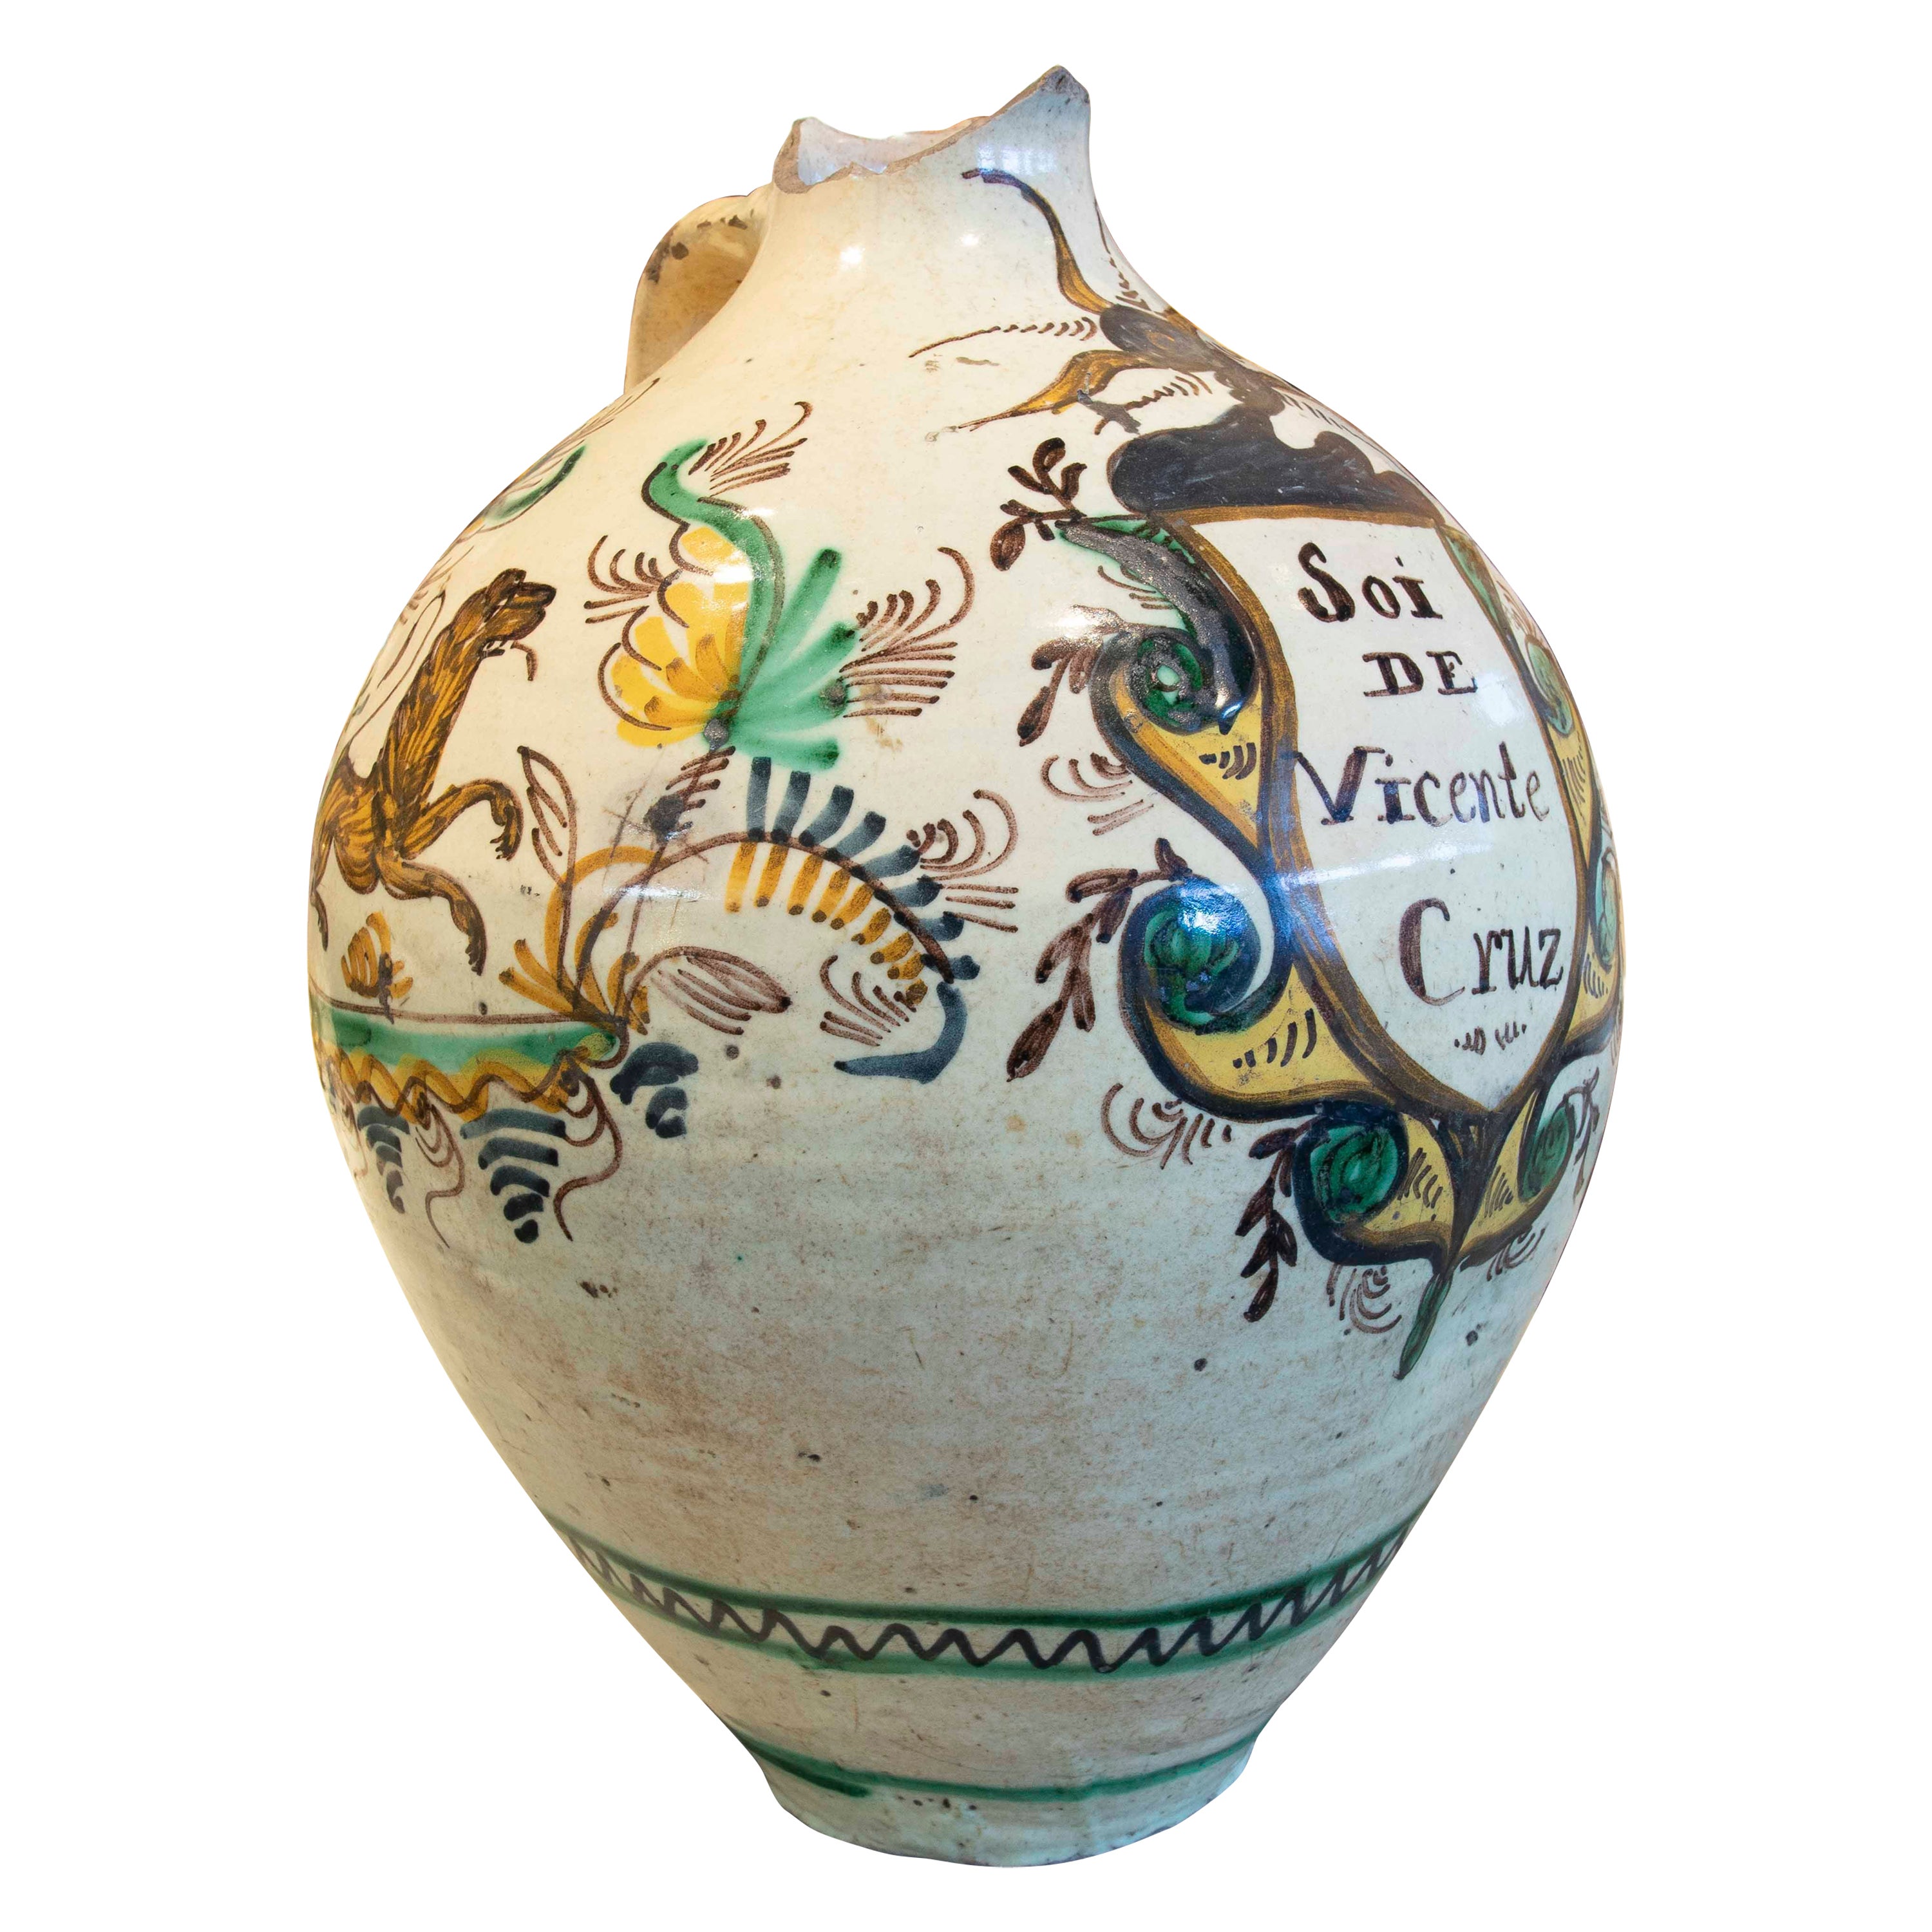 Spanish Glazed Ceramic Vase with the Inscription "Soi de Vicente Cruz"